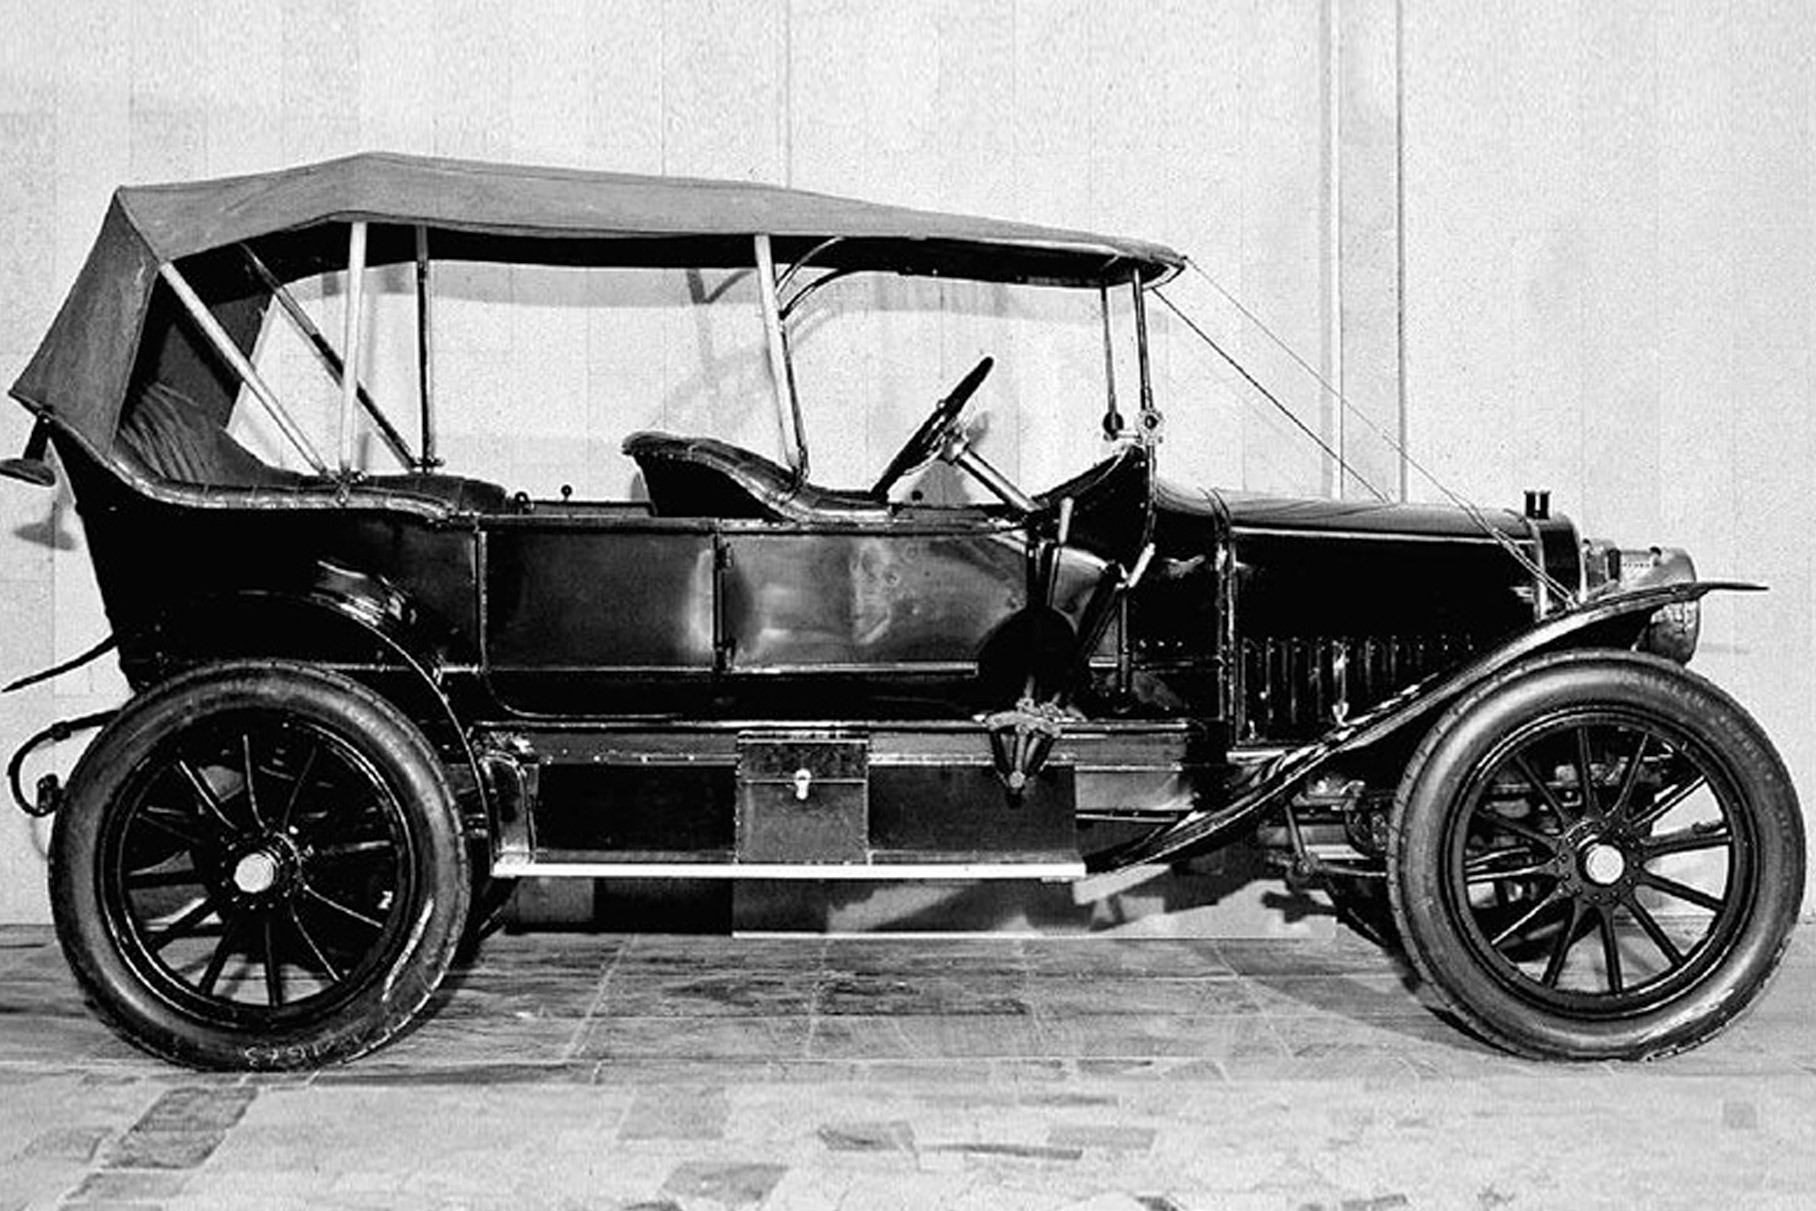 Автомобиль балт. Руссо-Балт 1909 г. Автомобиль Руссо-Балт 1911 г. Автомобиль Руссо-Балт 1909. Первый автомобиль Руссо-Балт.